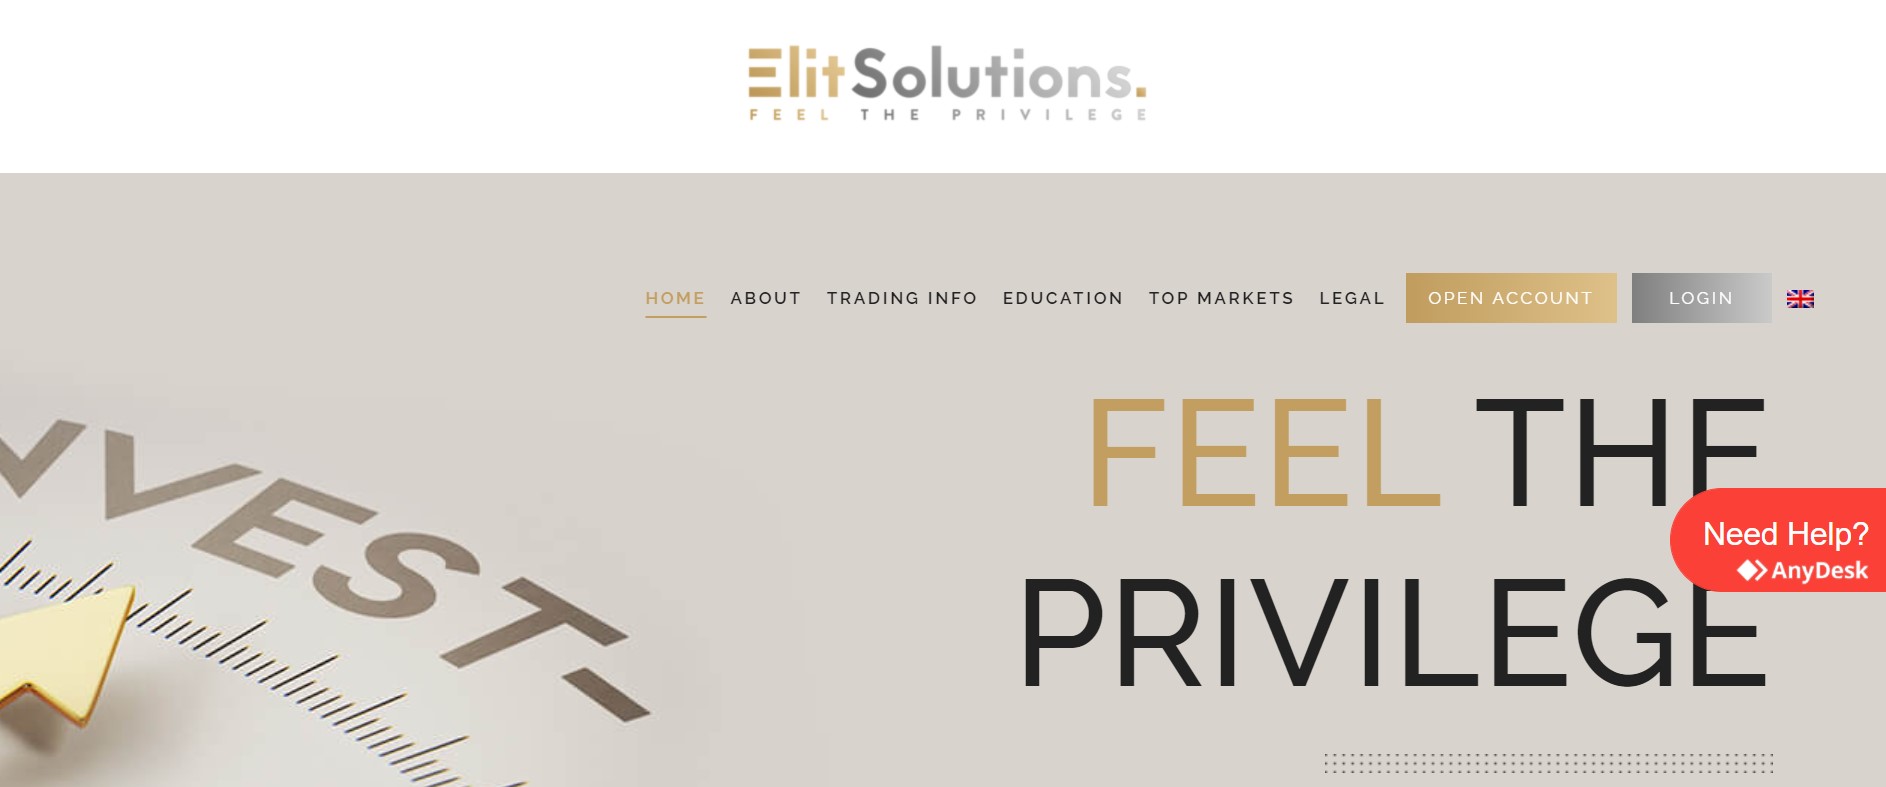 EliltSolutions website